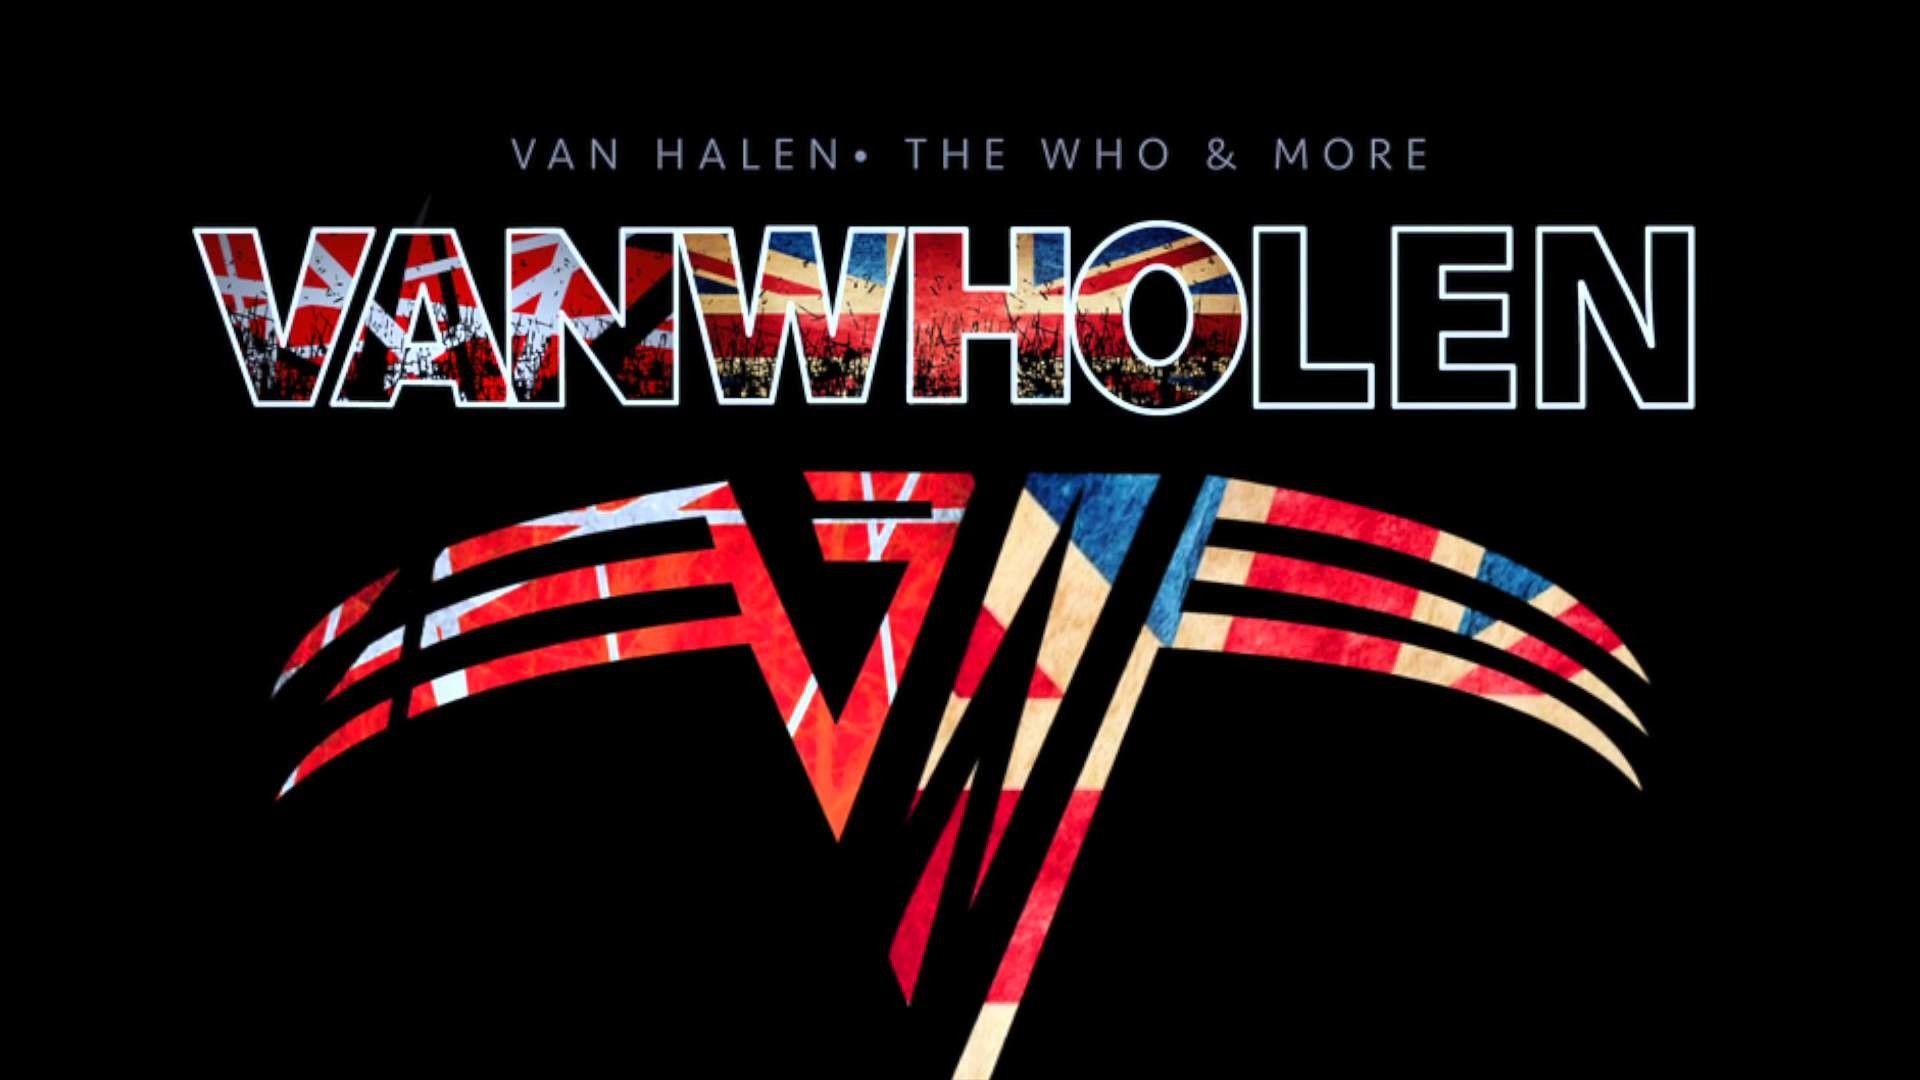 Van Halen Wallpaper.com Wallpaper World